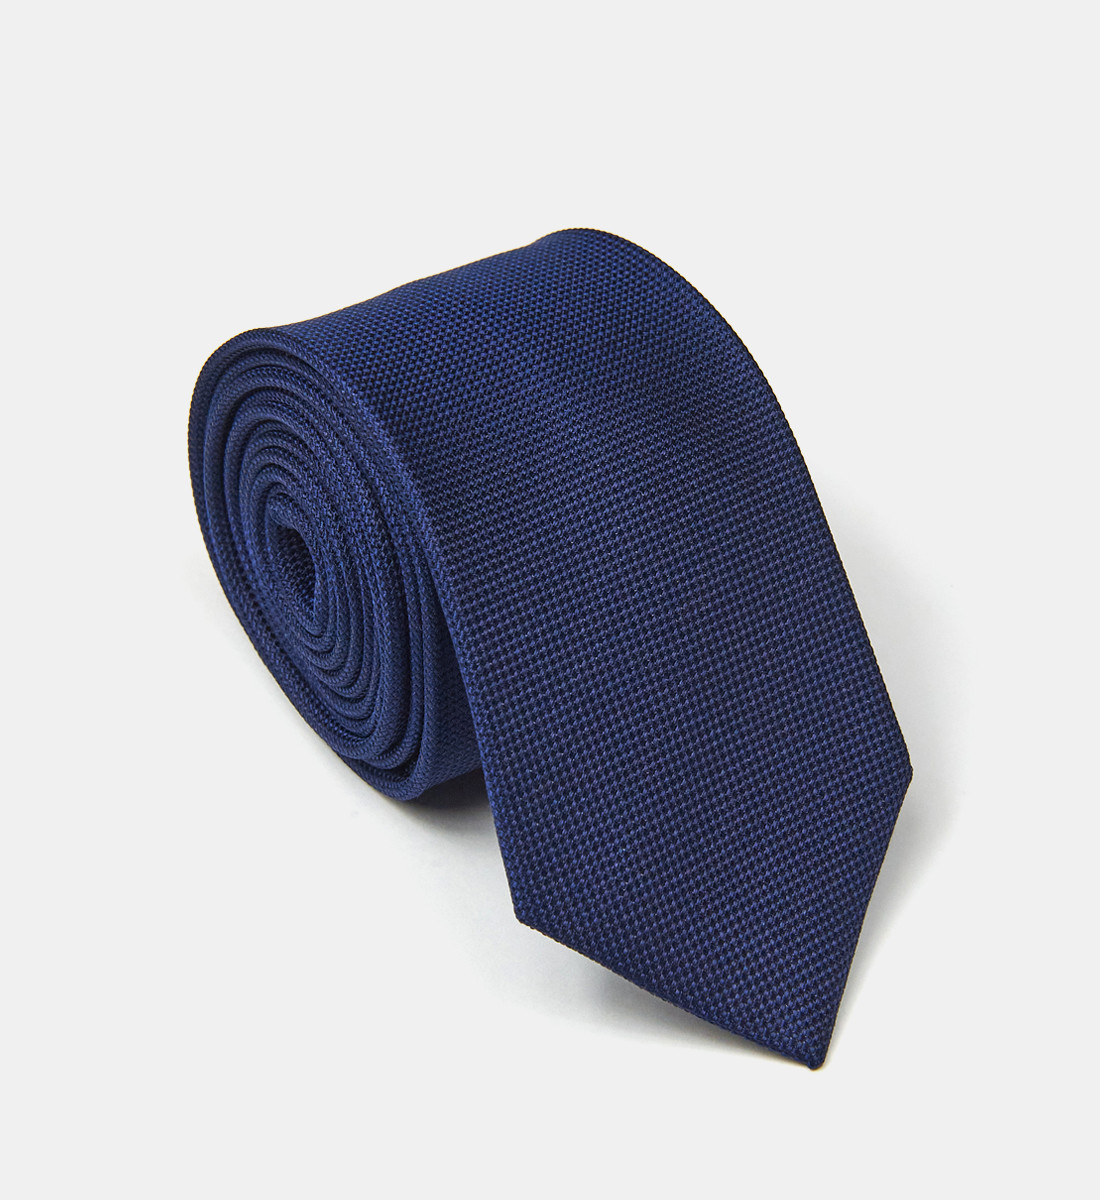 Cravate marine en soie